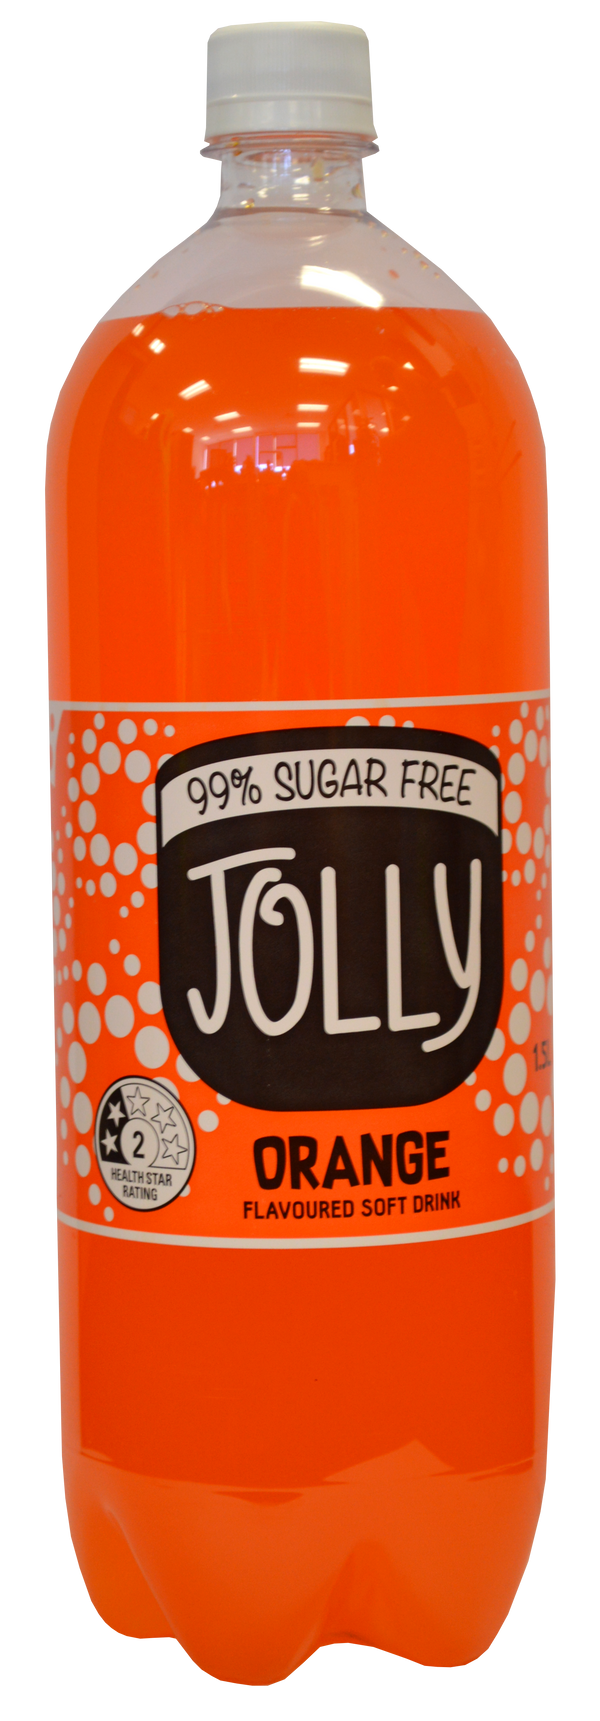 Jolly - Orange 1.5LT